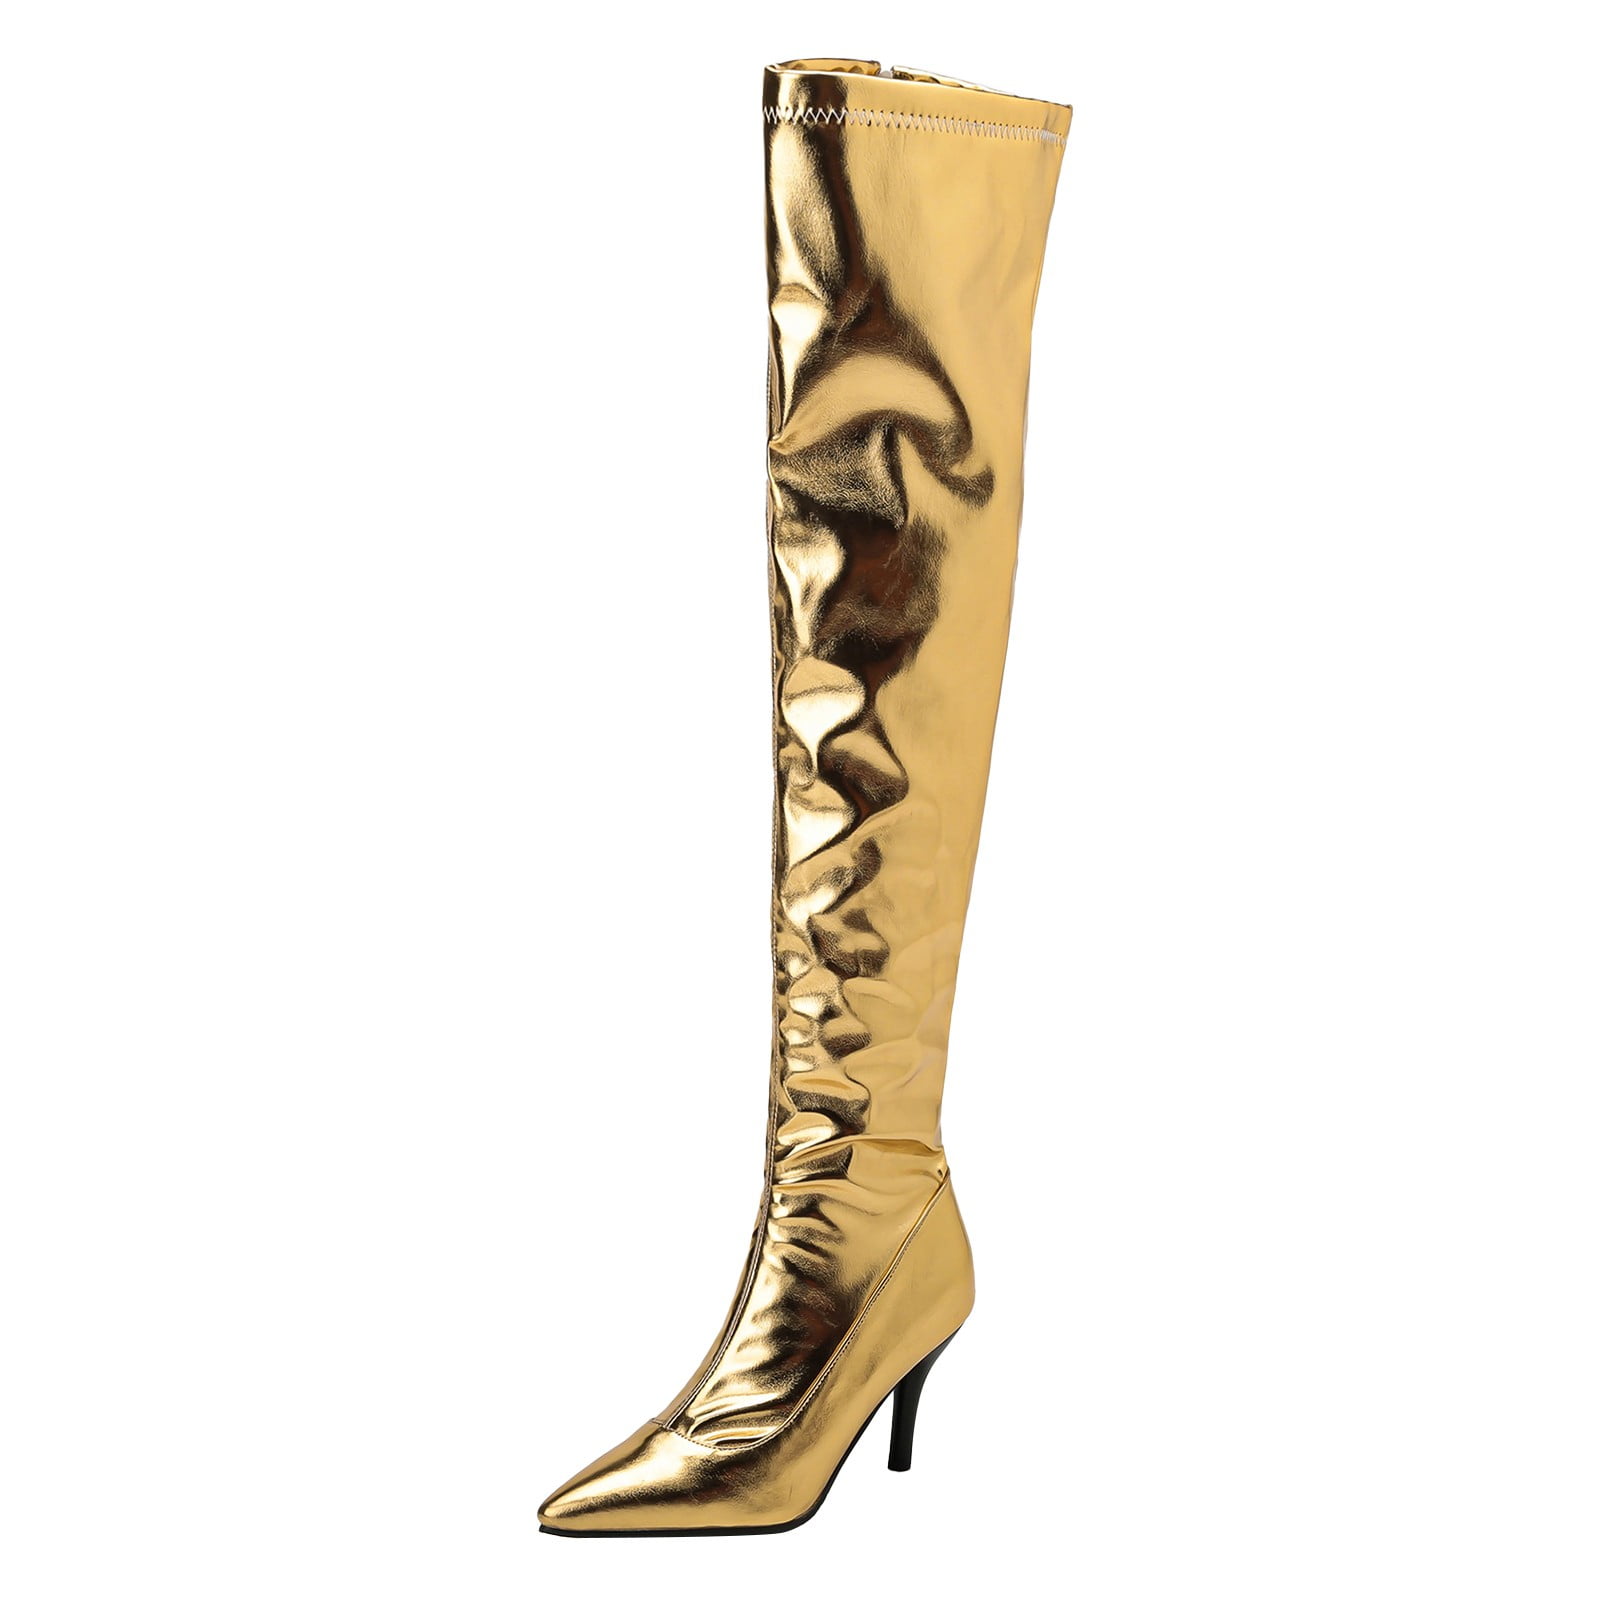 JDEFEG Nightclub Fashion High Heel Boots for Women Metal Style